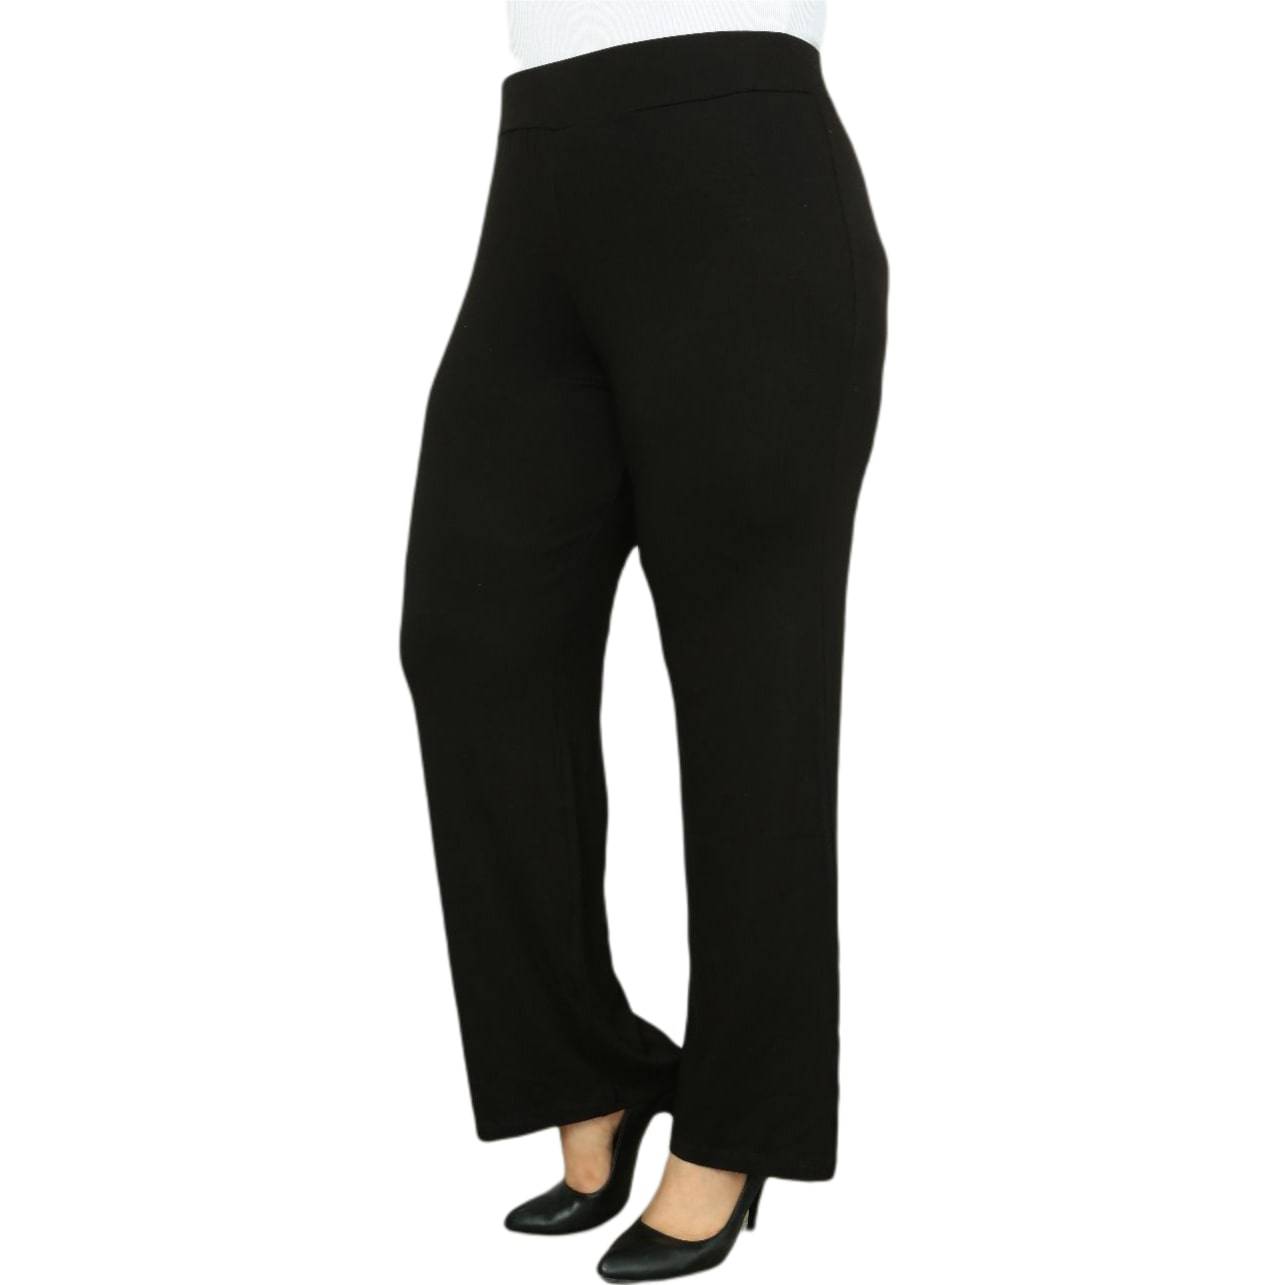 High Rise Full-Length Elegant Viscose Woven Shorts + 2XL - 7XL + Large Highly Seasonal Chic Jeans EU Street wear Female Black - TheWellBeing4All